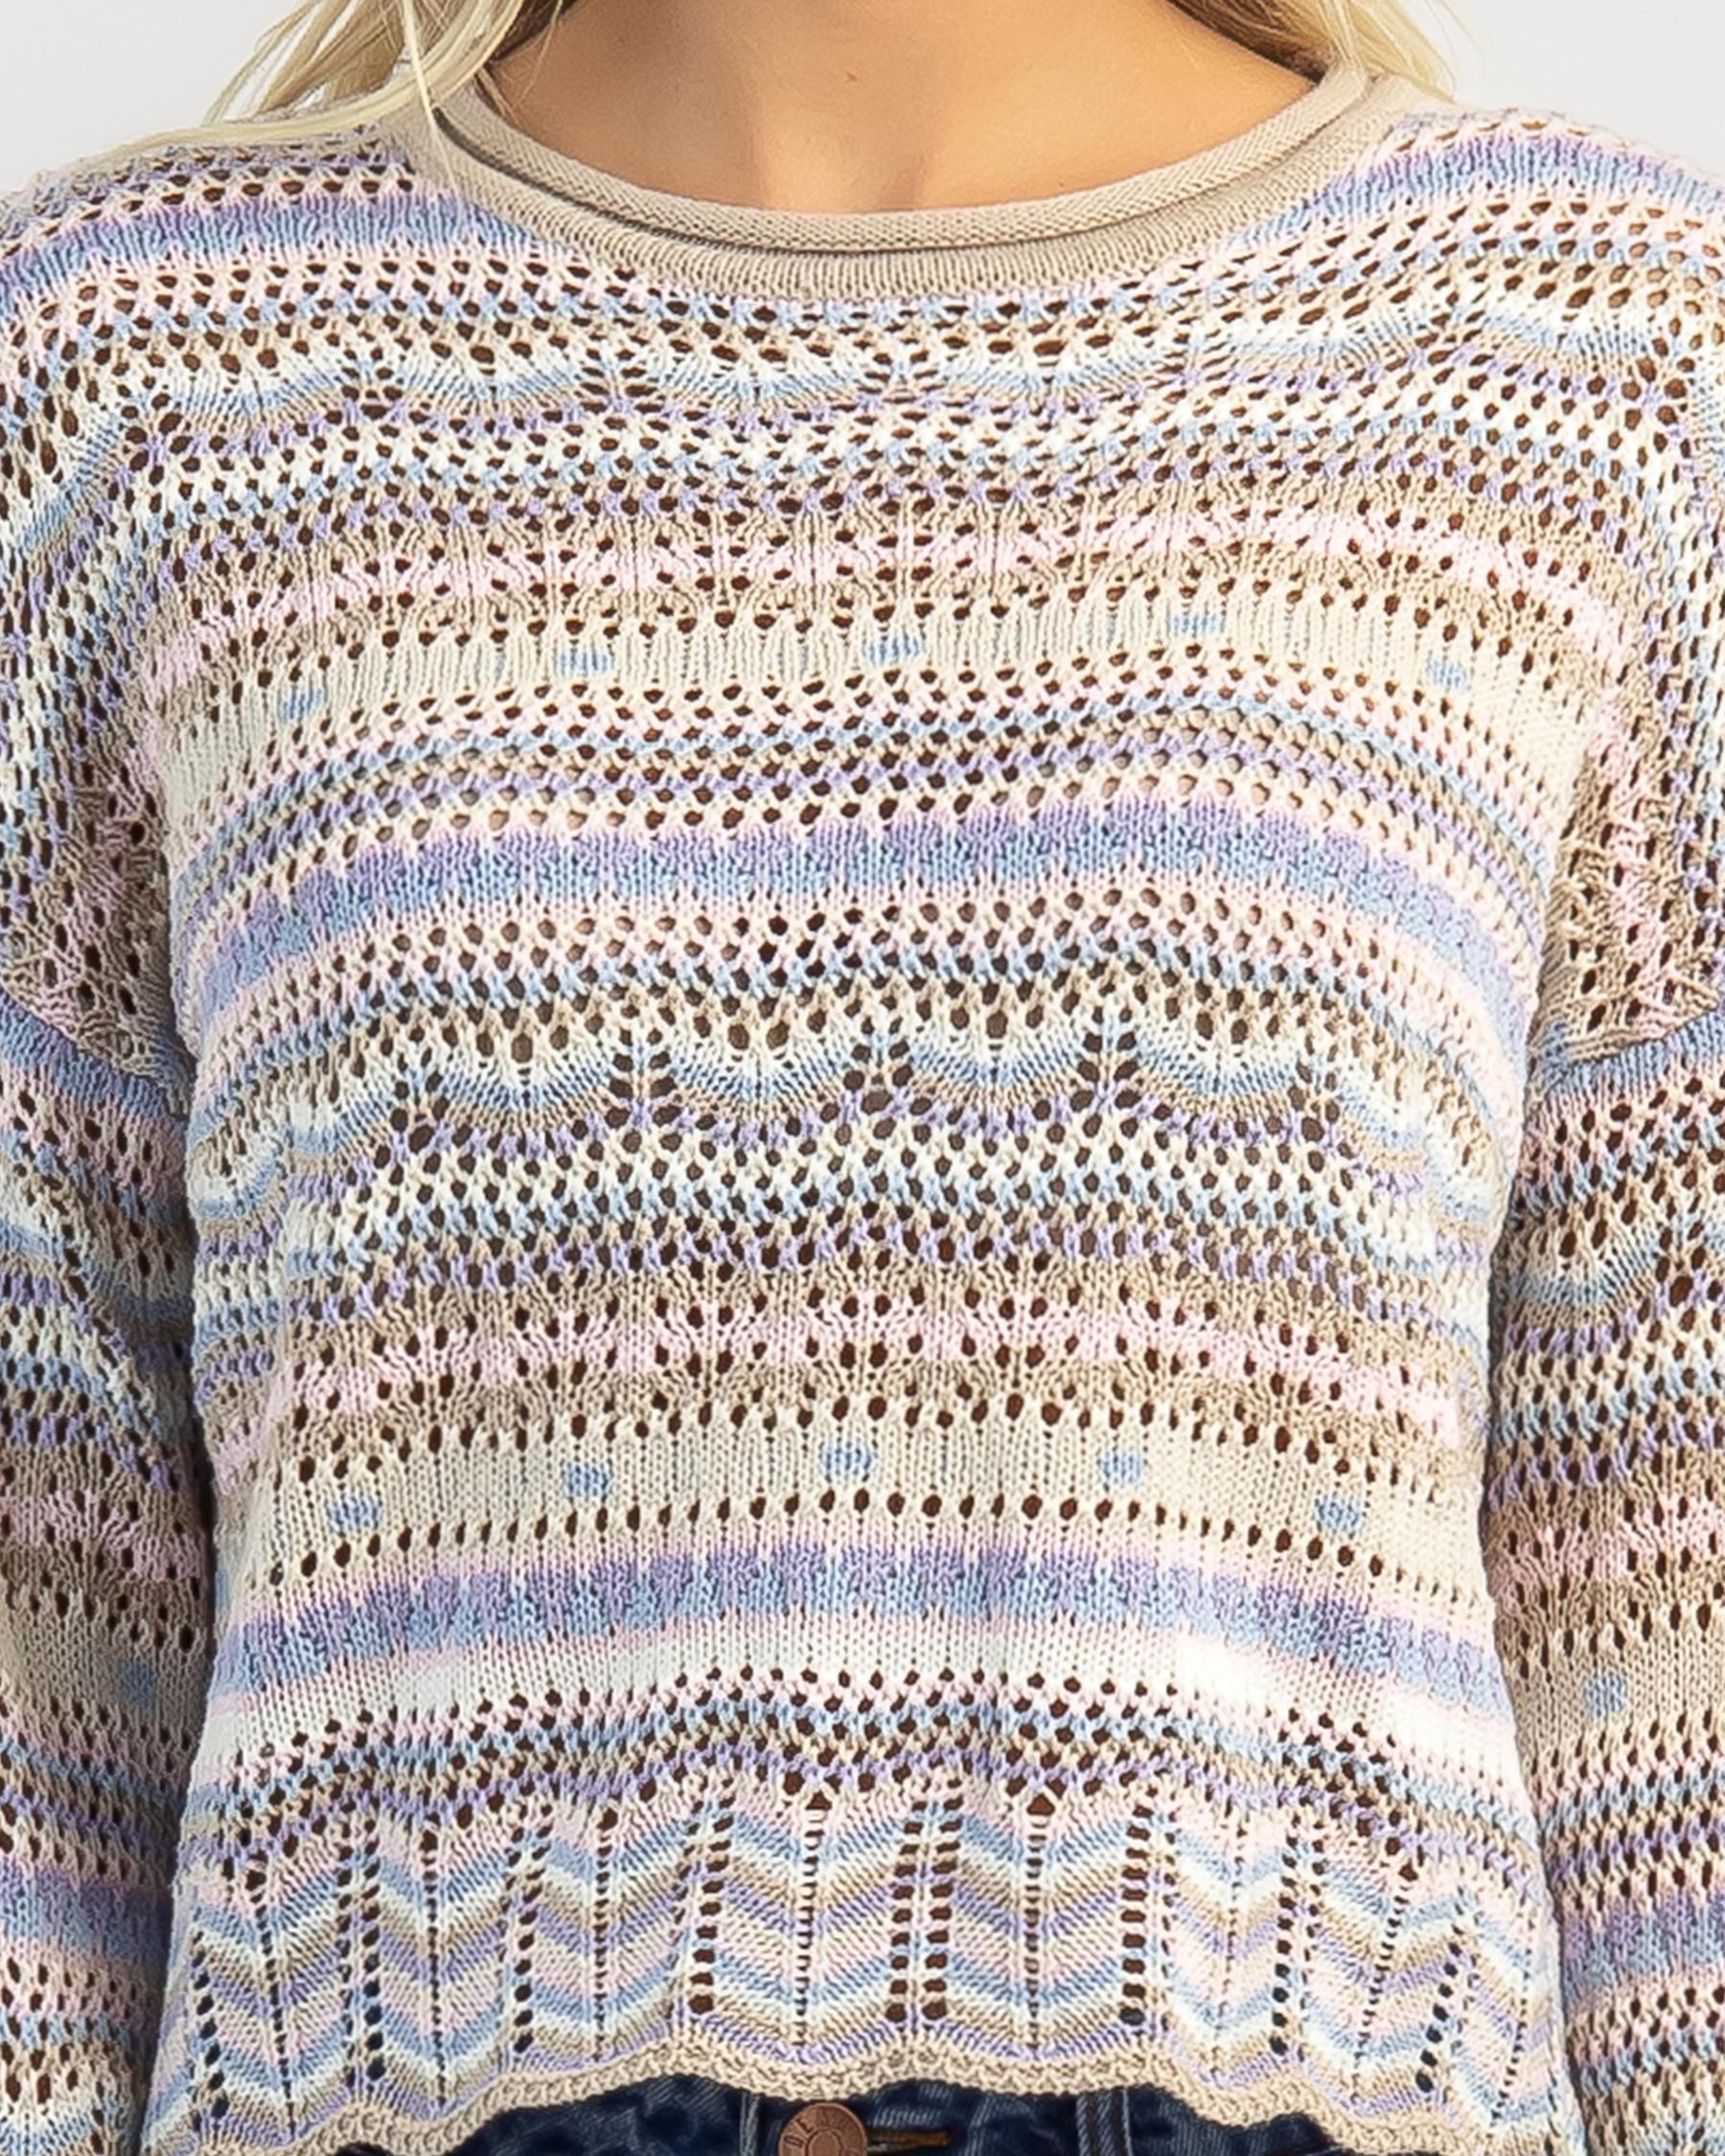 34 White Yarn Crochet Doily Dream Catcher – Two Seaside Babes